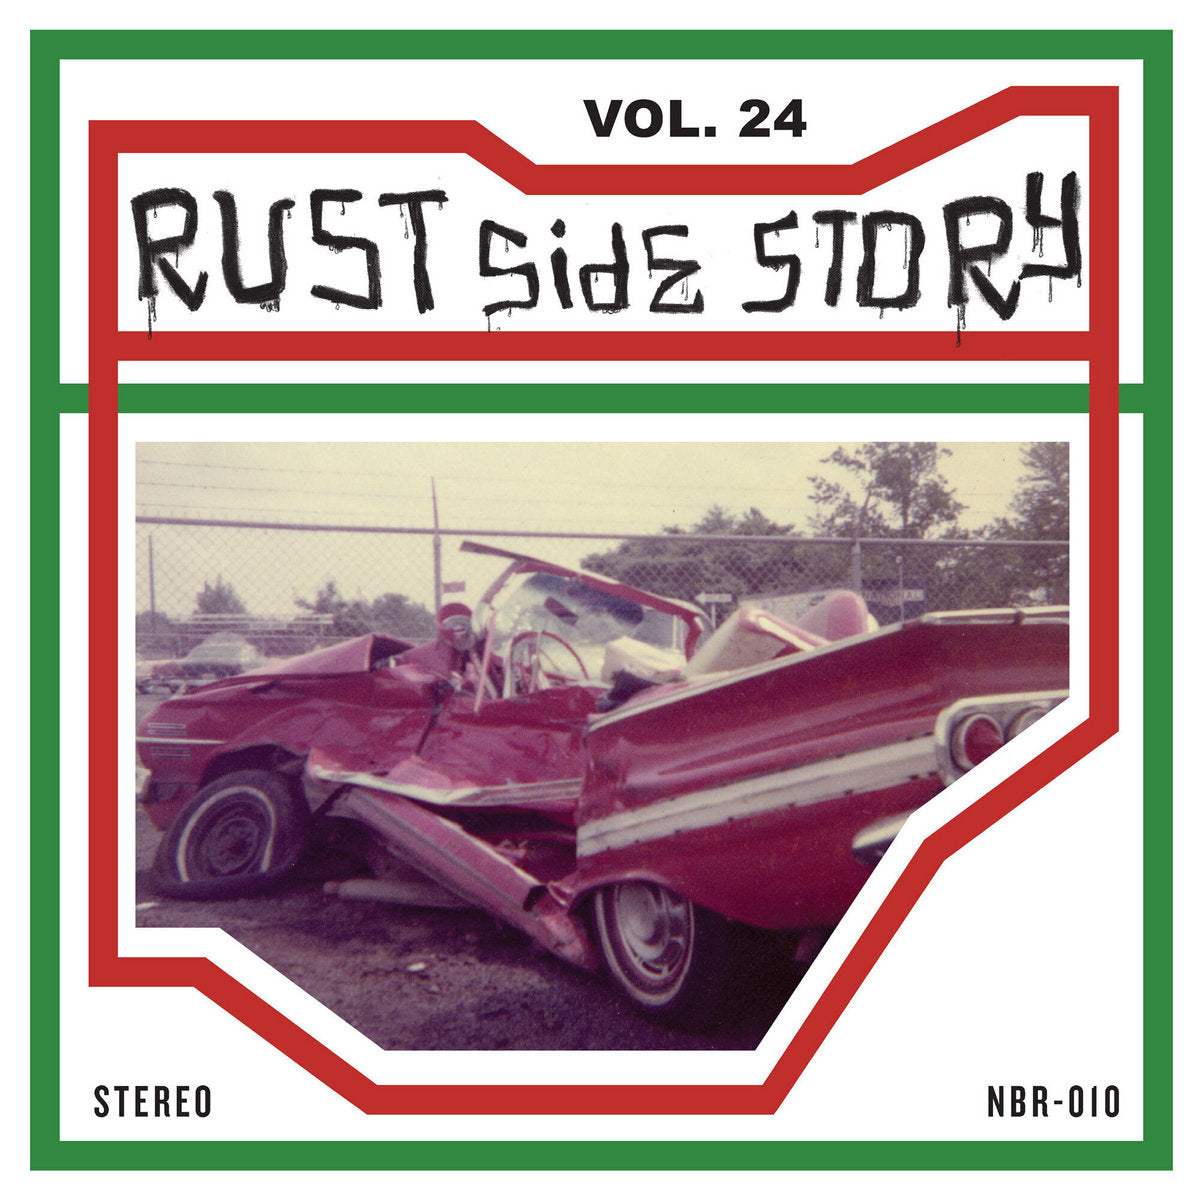 Rust Side Story Vol. 24 (New LP)